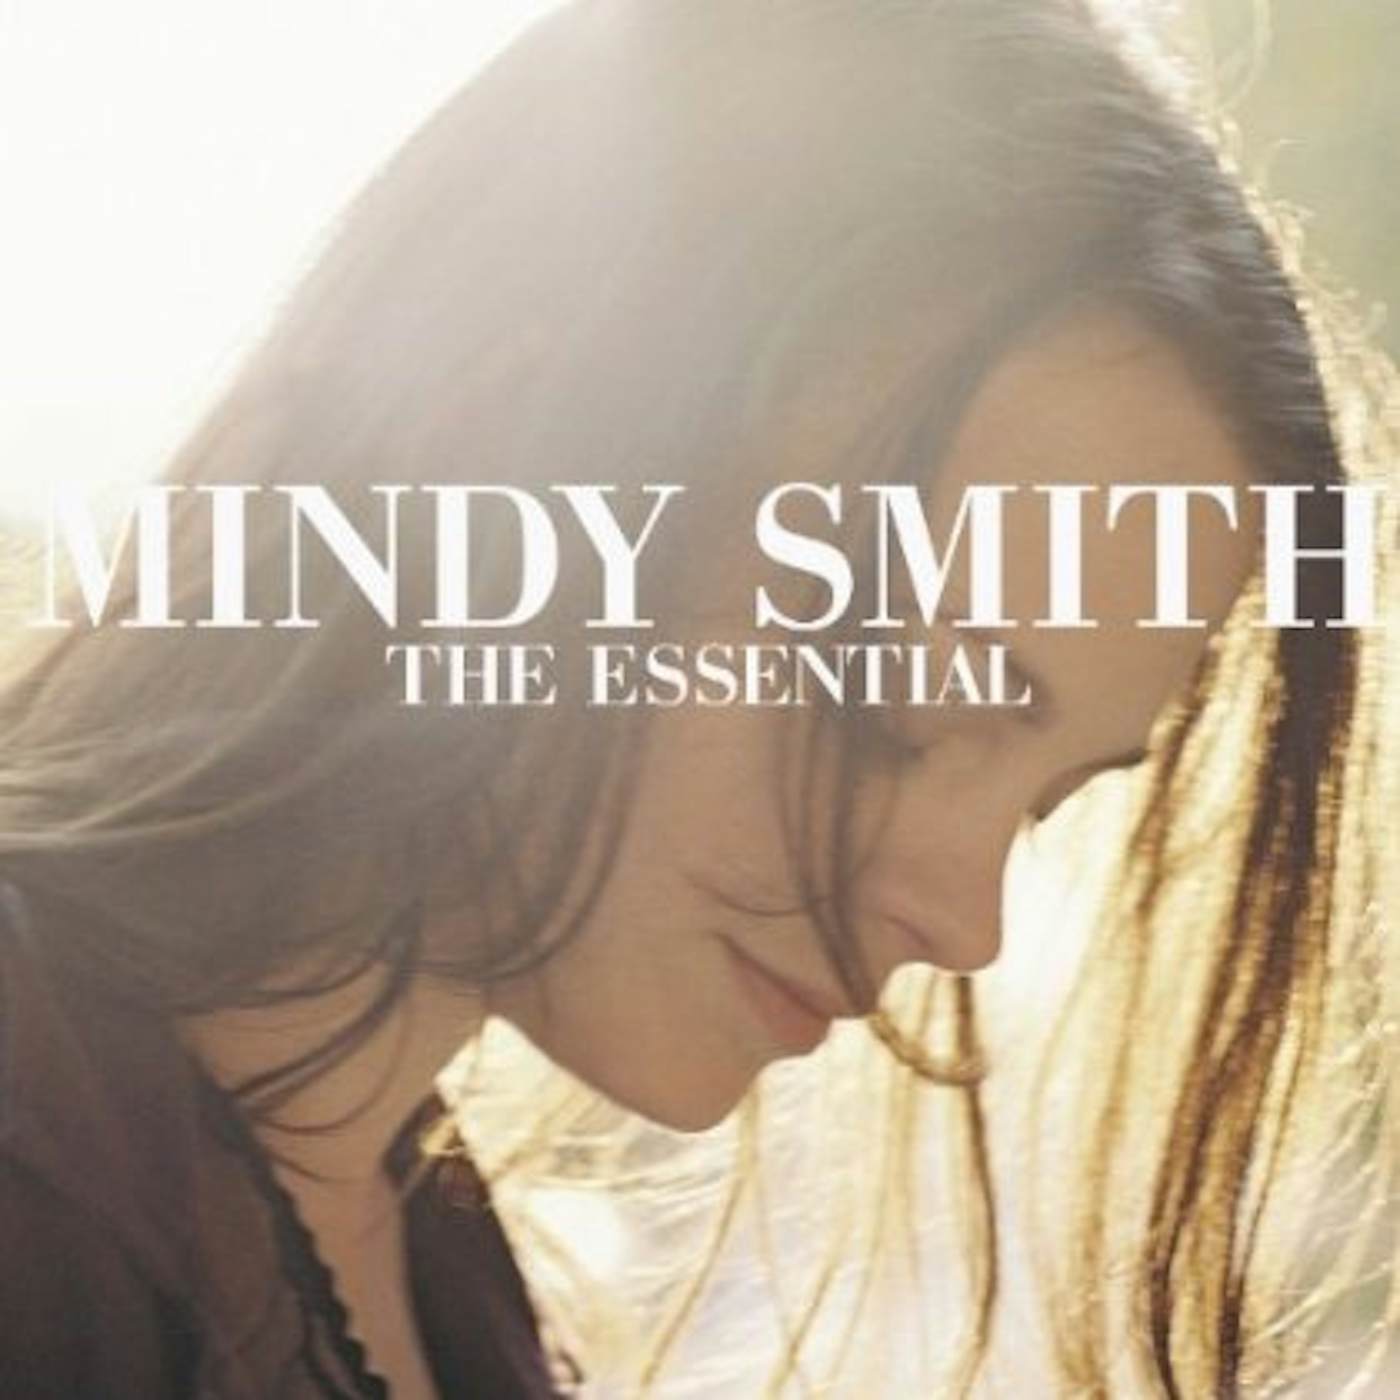 Mindy Smith ESSENTIAL Vinyl Record